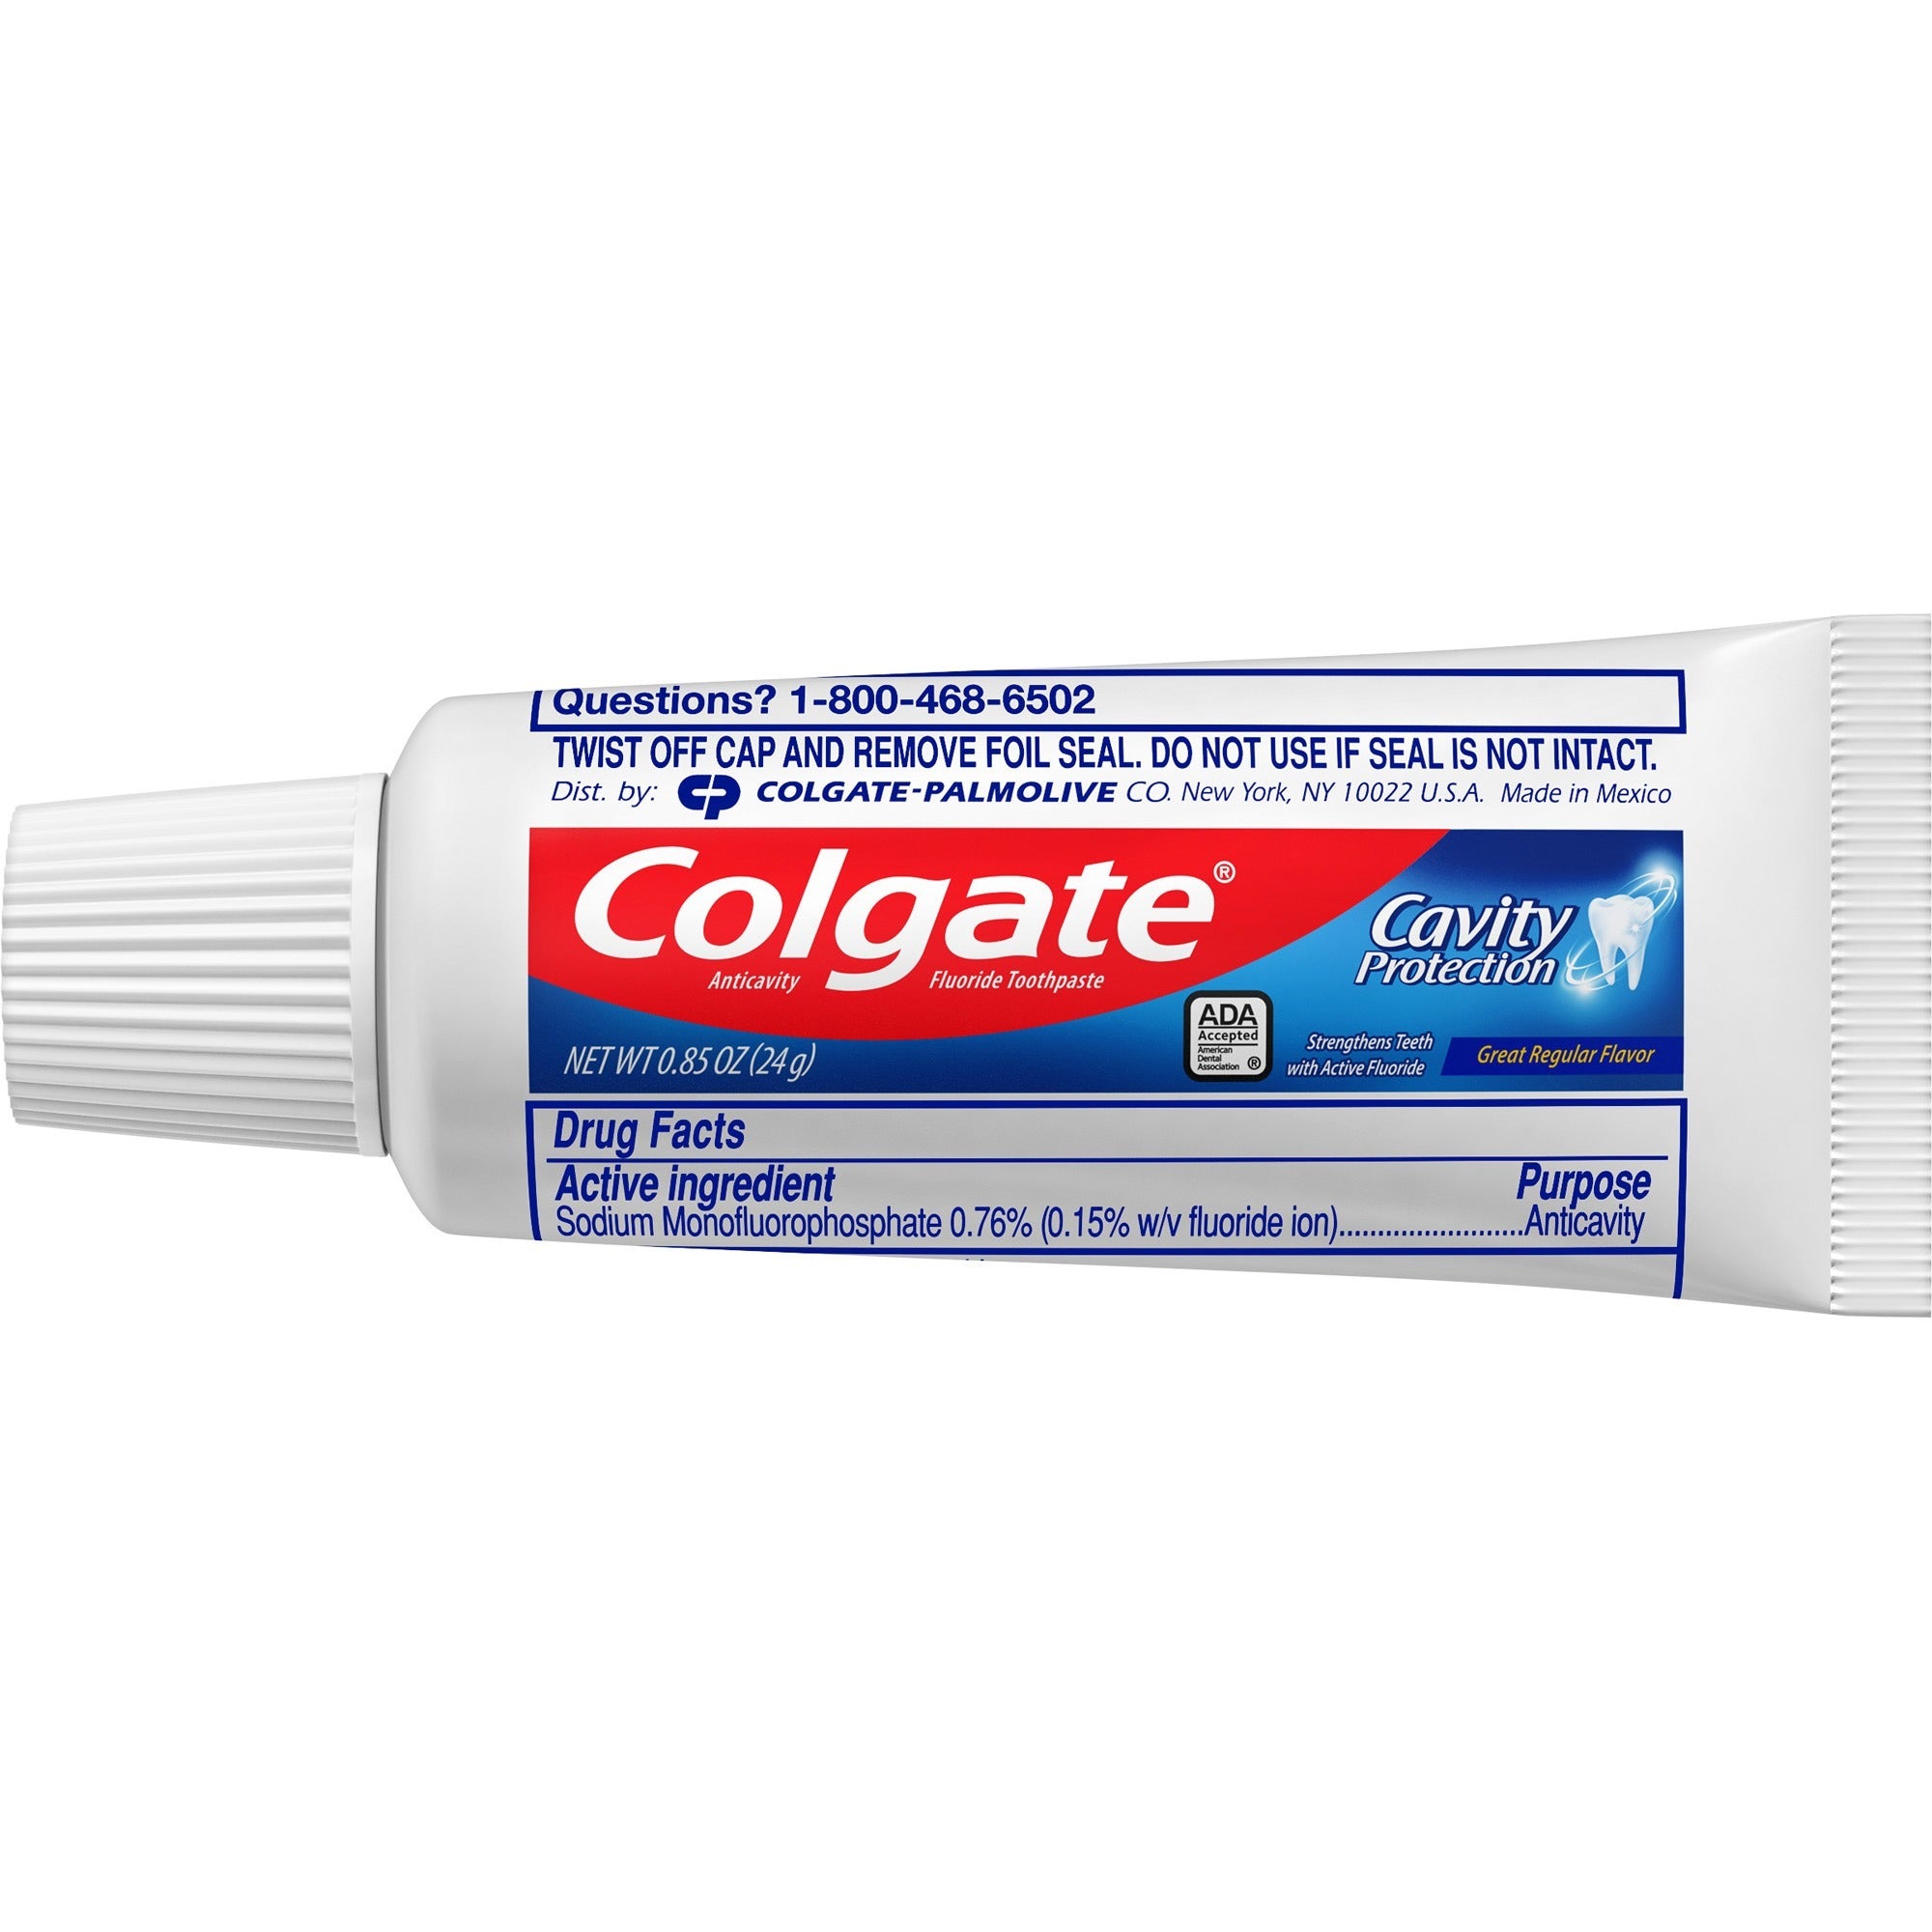 colgate-great-regular-flavor-toothpaste-240-carton-white_cpc109782 - 1